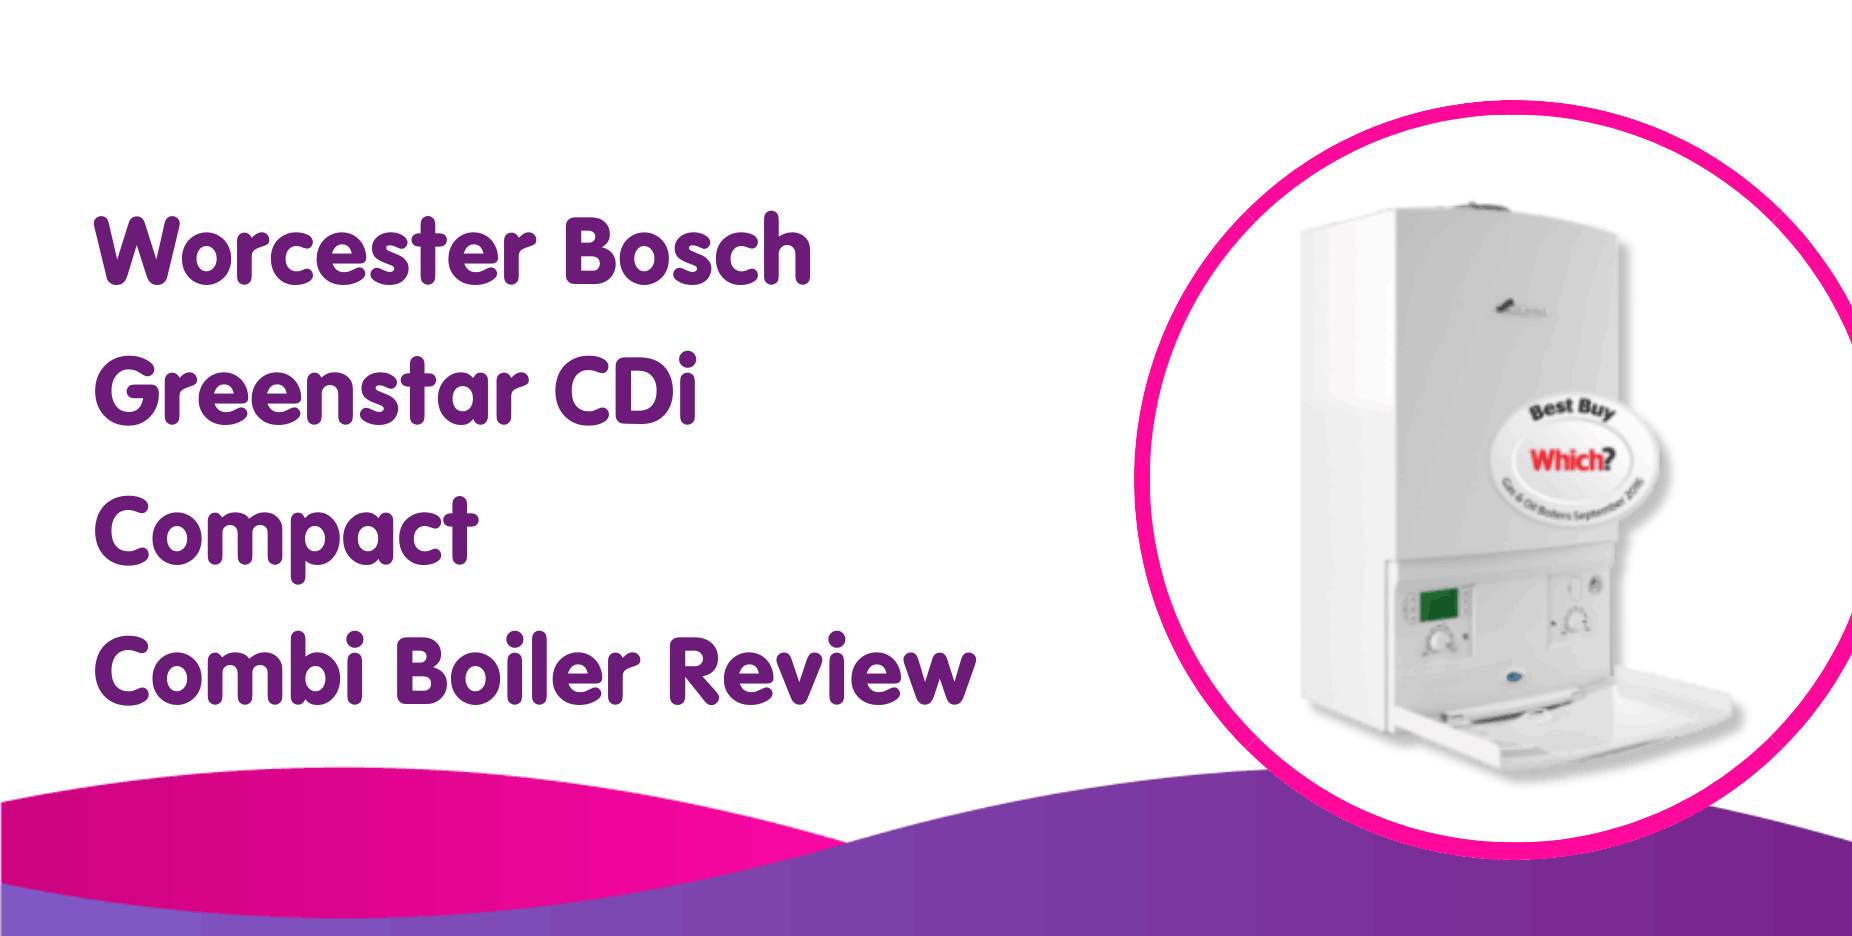 Worcester Bosch Greenstar CDi Compact Combi Boiler Review